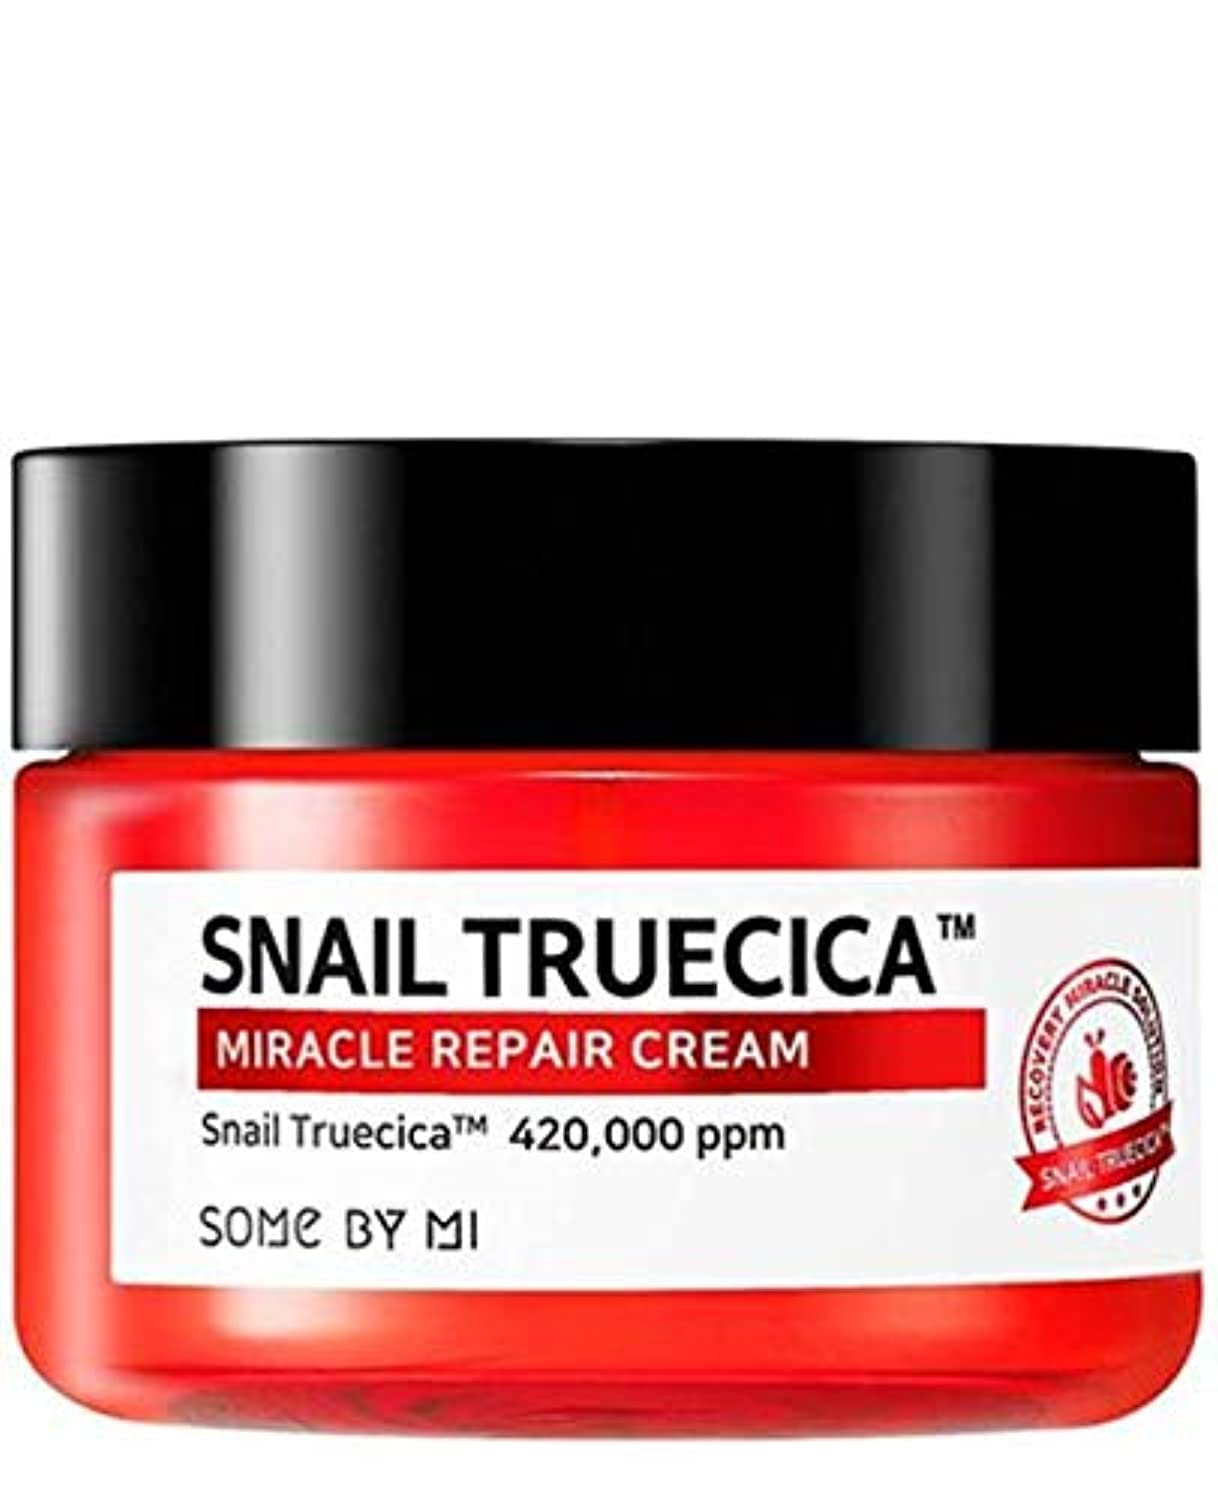 SOMEBYMI Snail TrueCICA Miracle Repair Cream